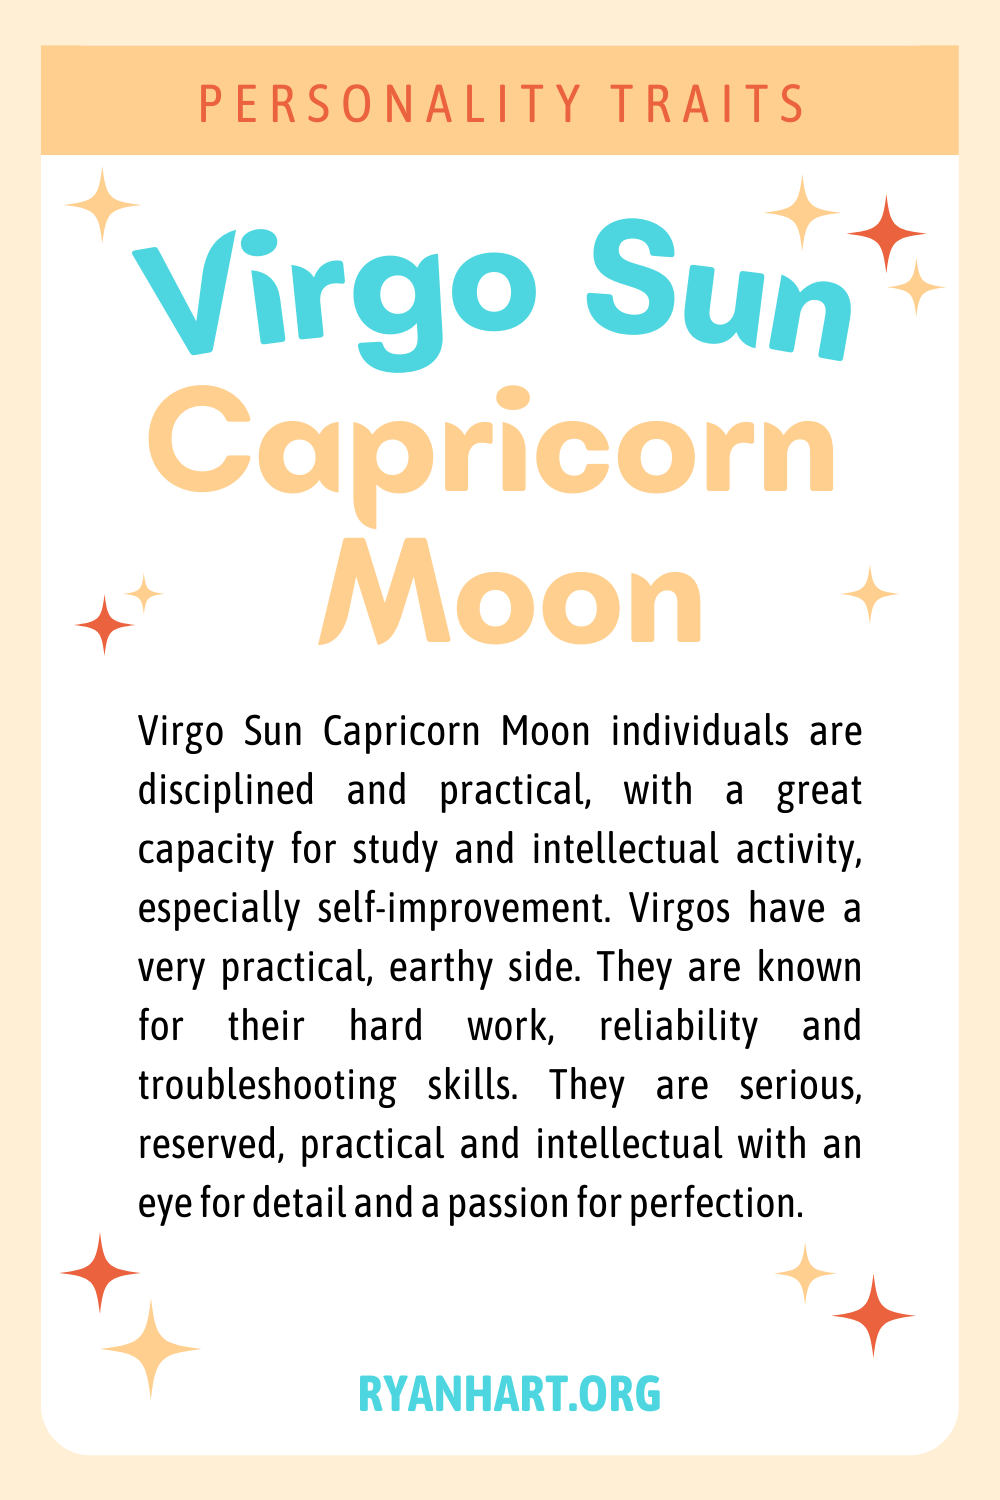 Virgo Sun Capricorn Moon Description